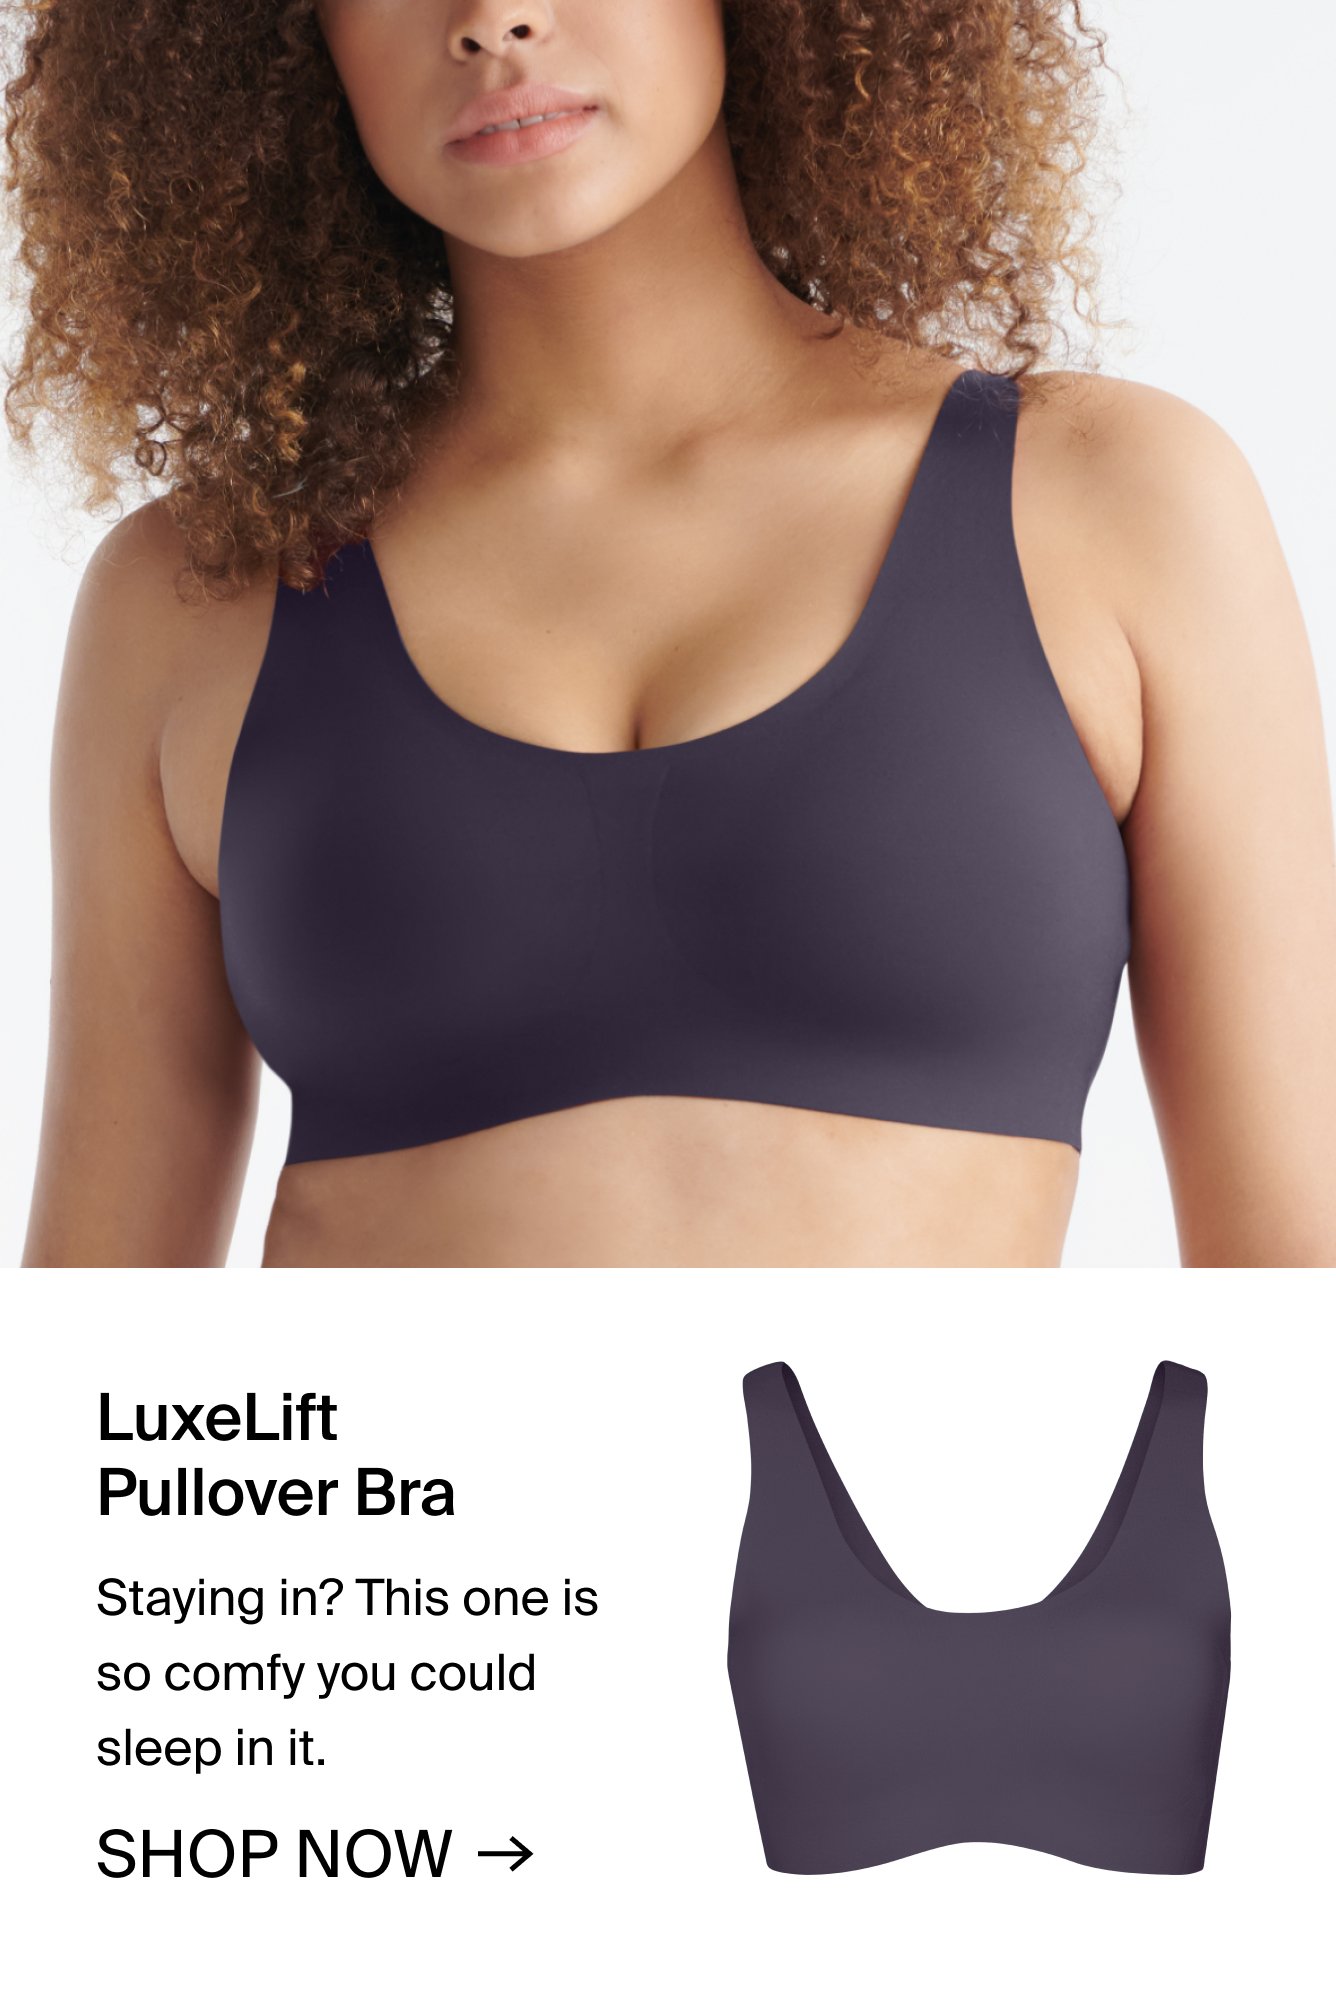 LuxeLift Pullover Bra - Sale